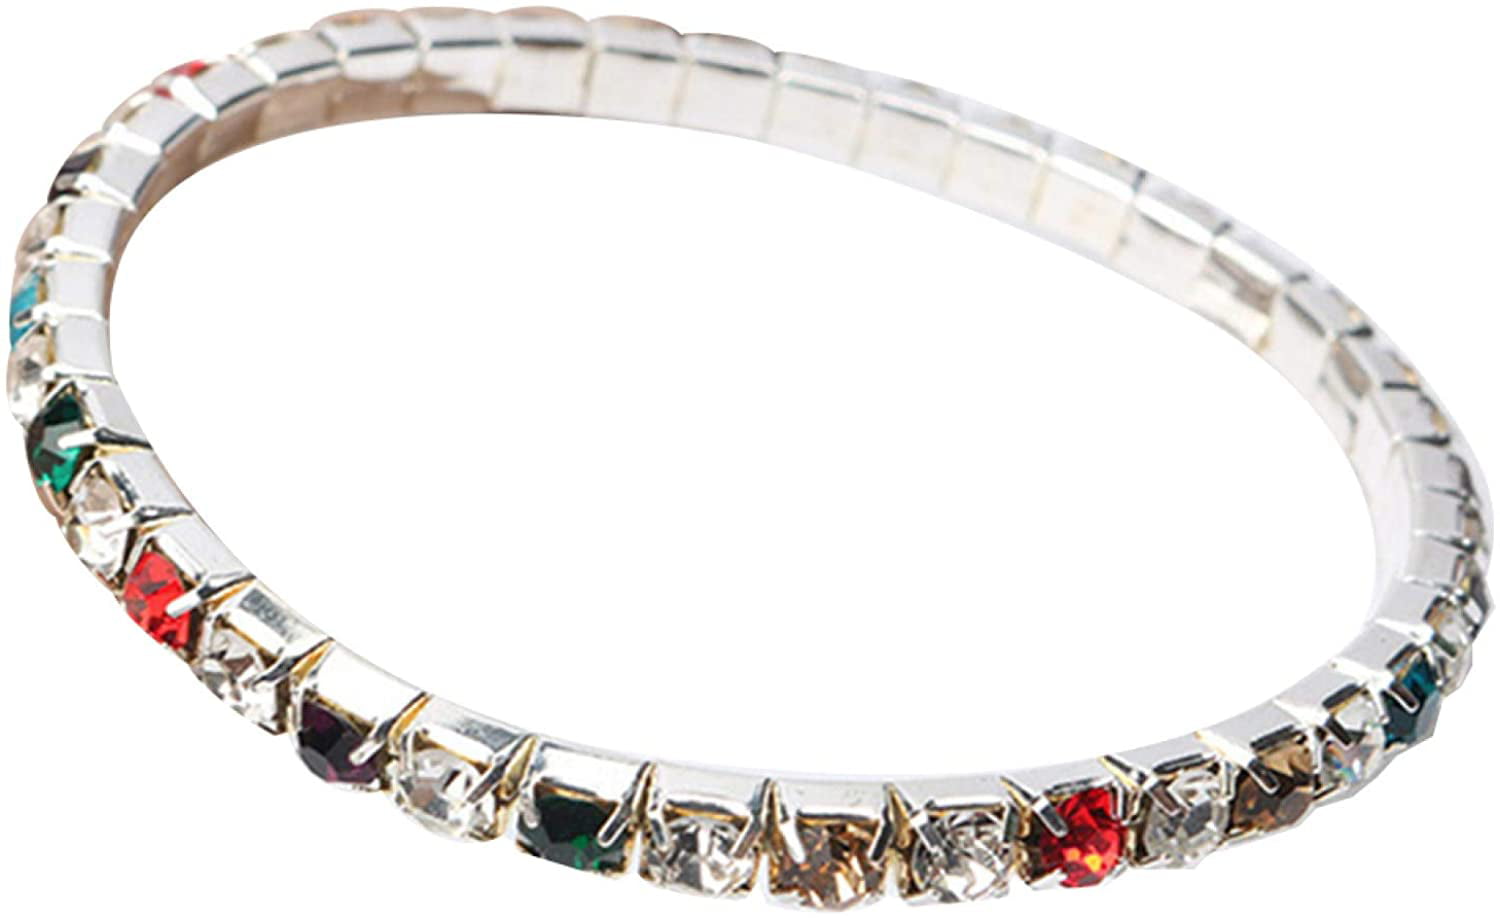 Luxury Single Row Full Rhinestone Inlaid Bracelet Elastic Bangle Jewelry for Women Men Girls Boys 